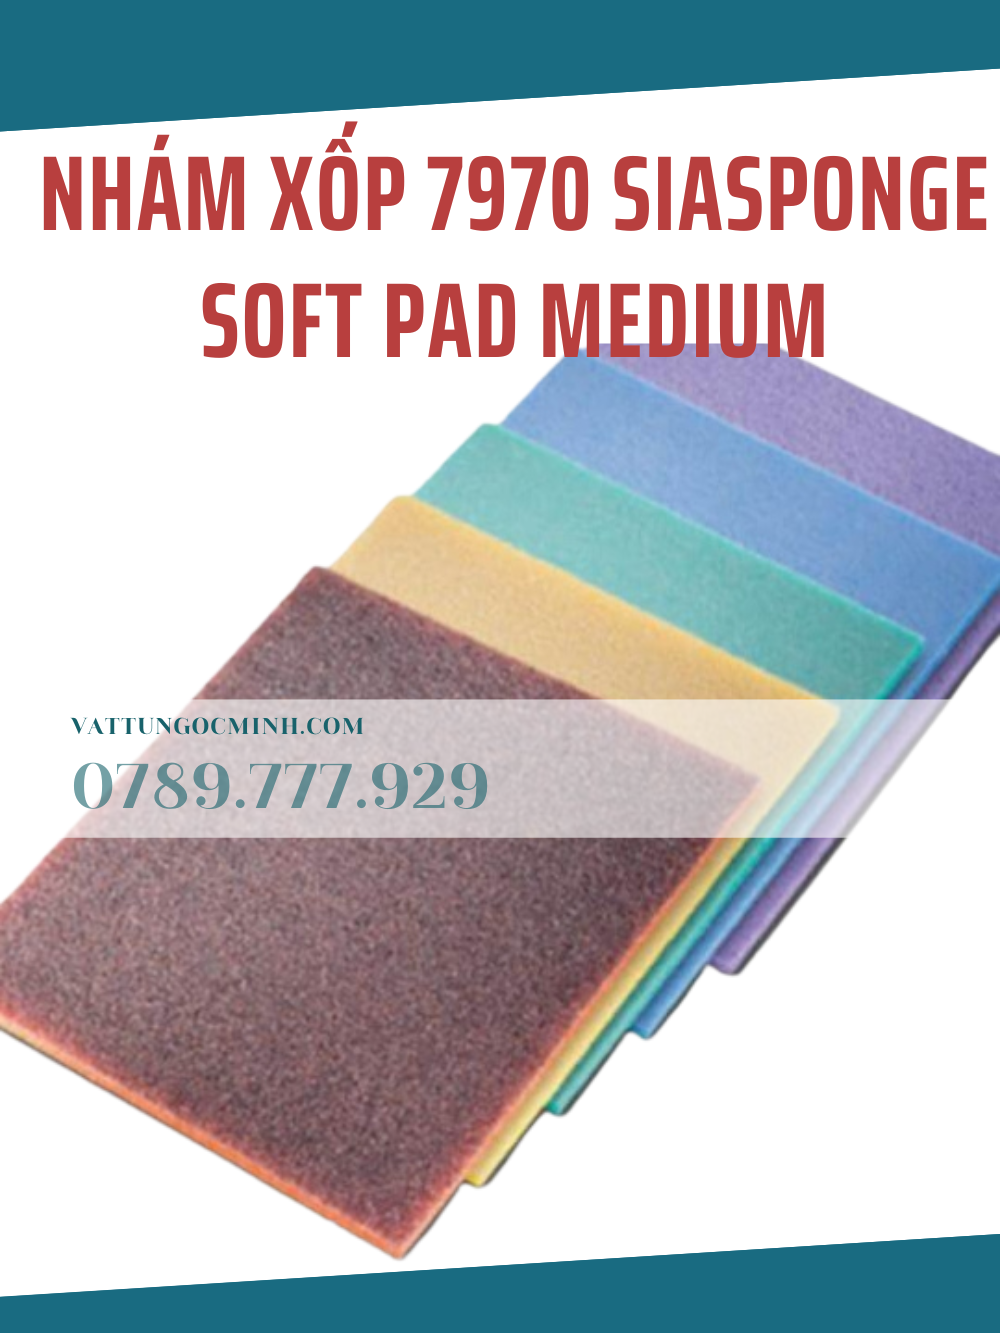 Nhám Xốp 7970 Siasponge Soft Pad Medium